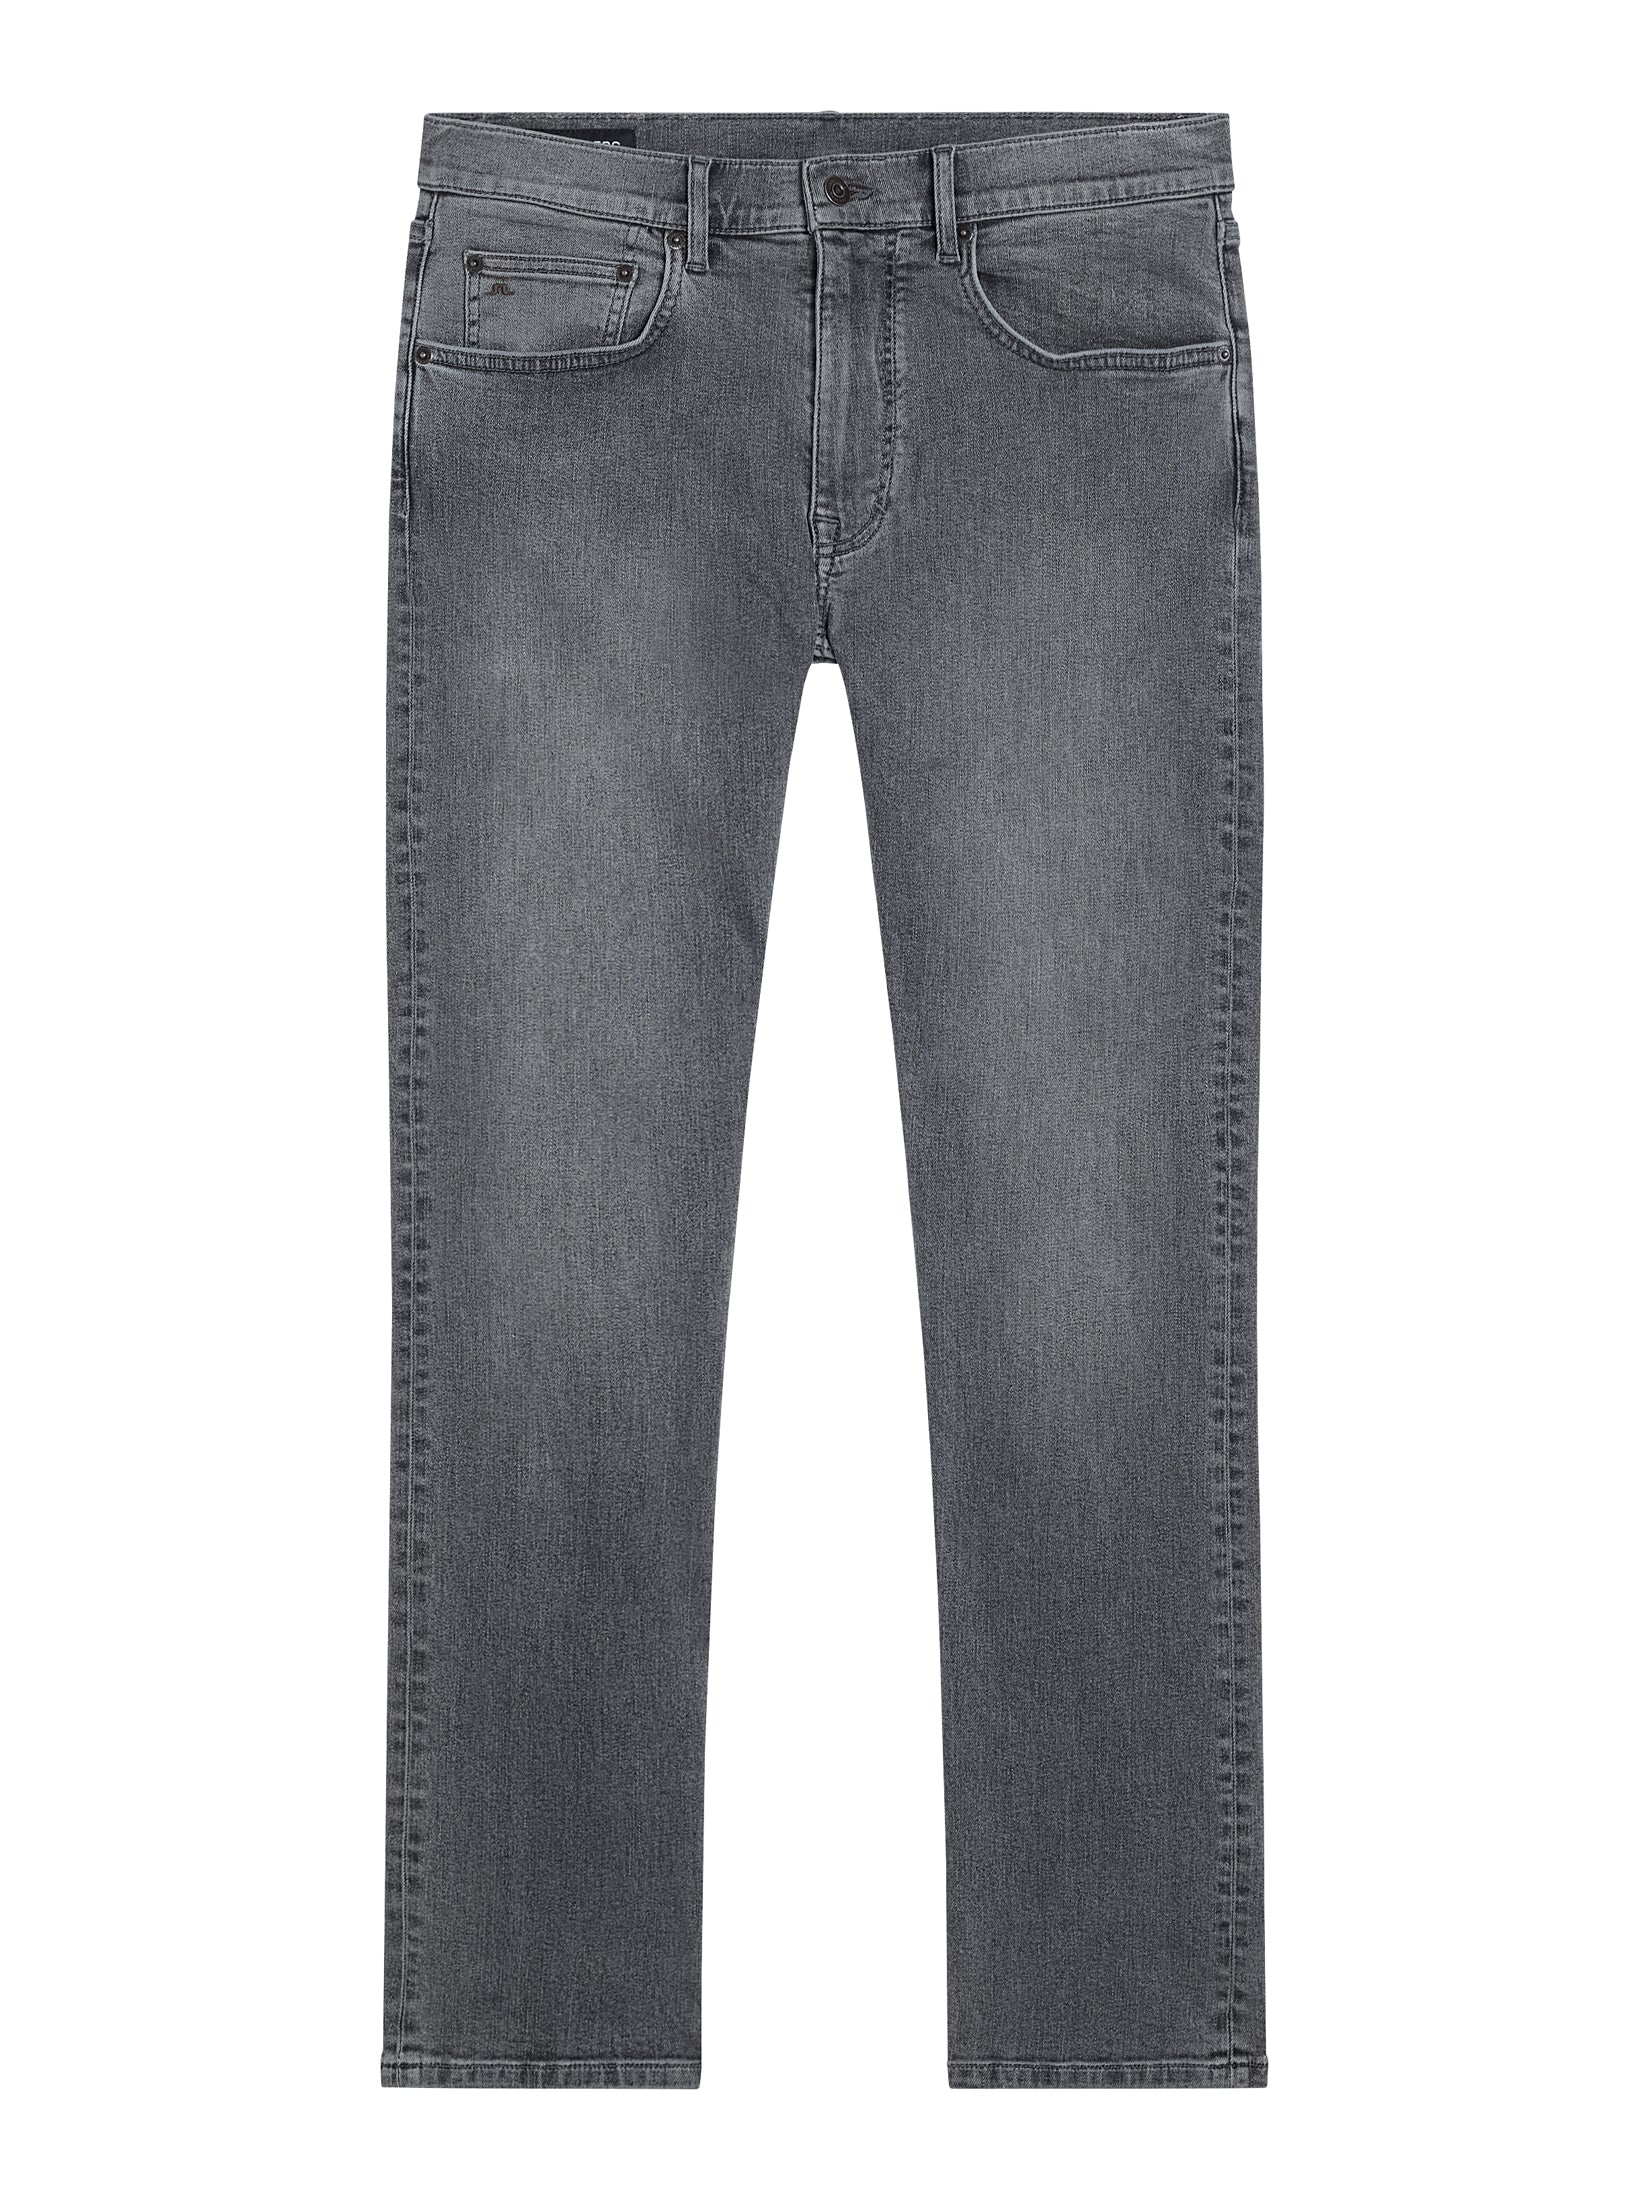 Cedar Granite Wash Jeans Grey